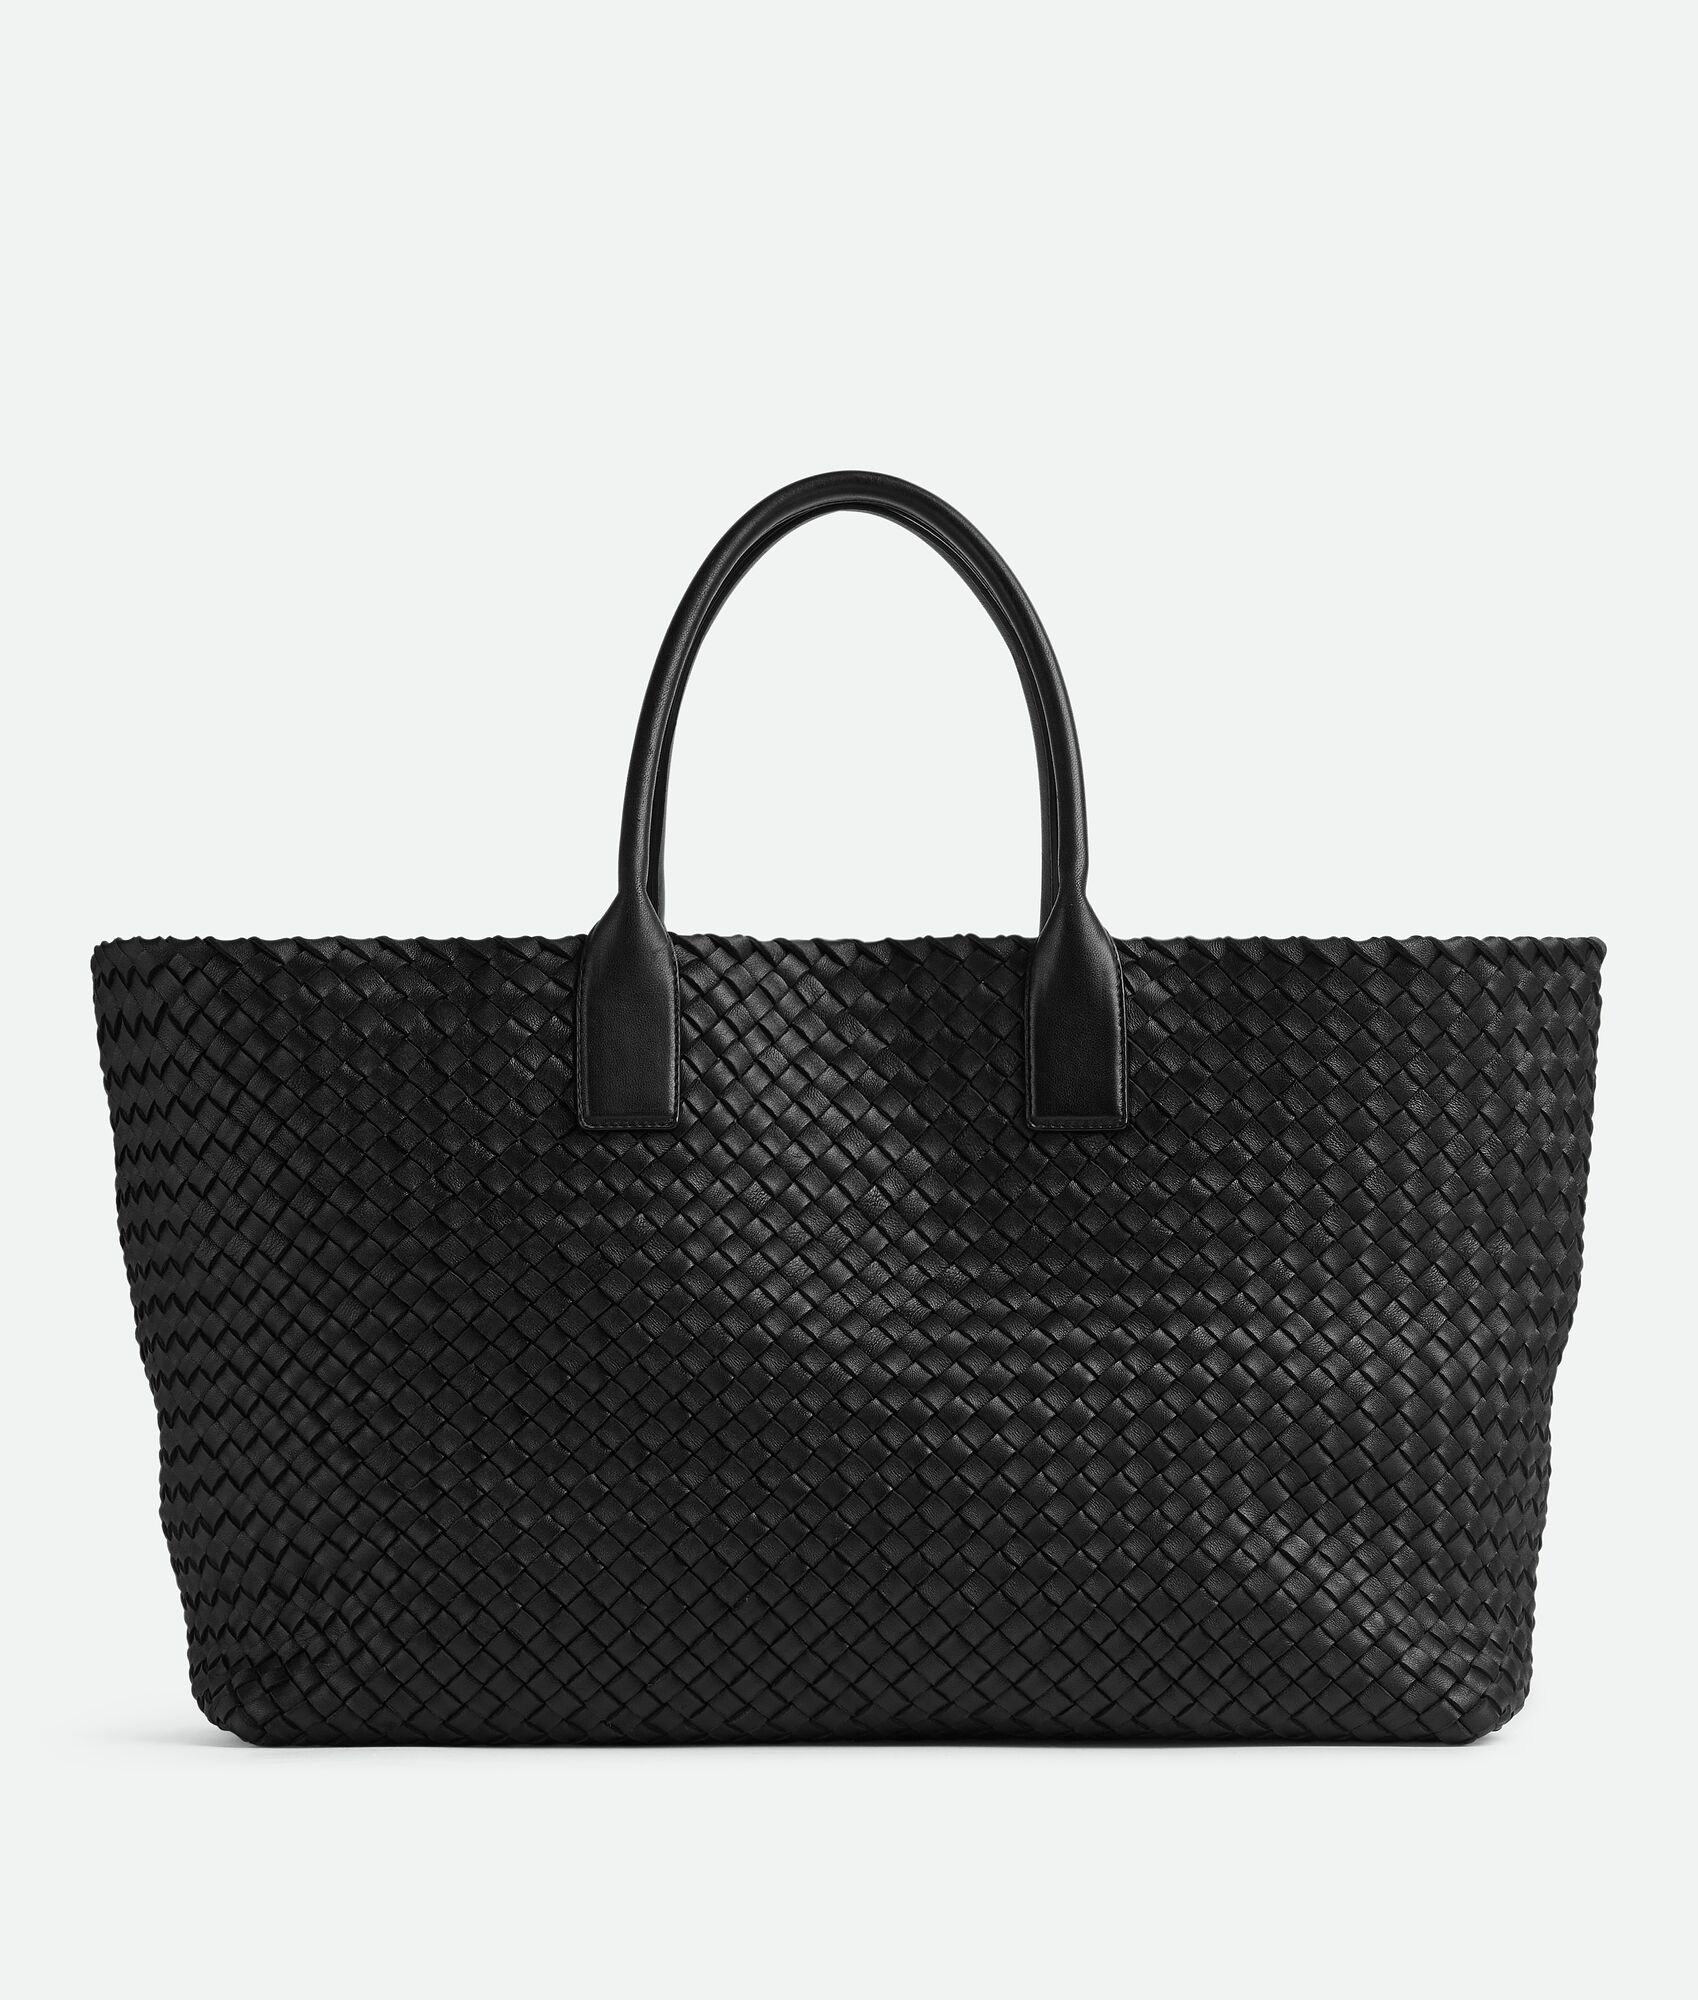 Bottega Veneta® Women's Large Cabat in Black. Shop online now.